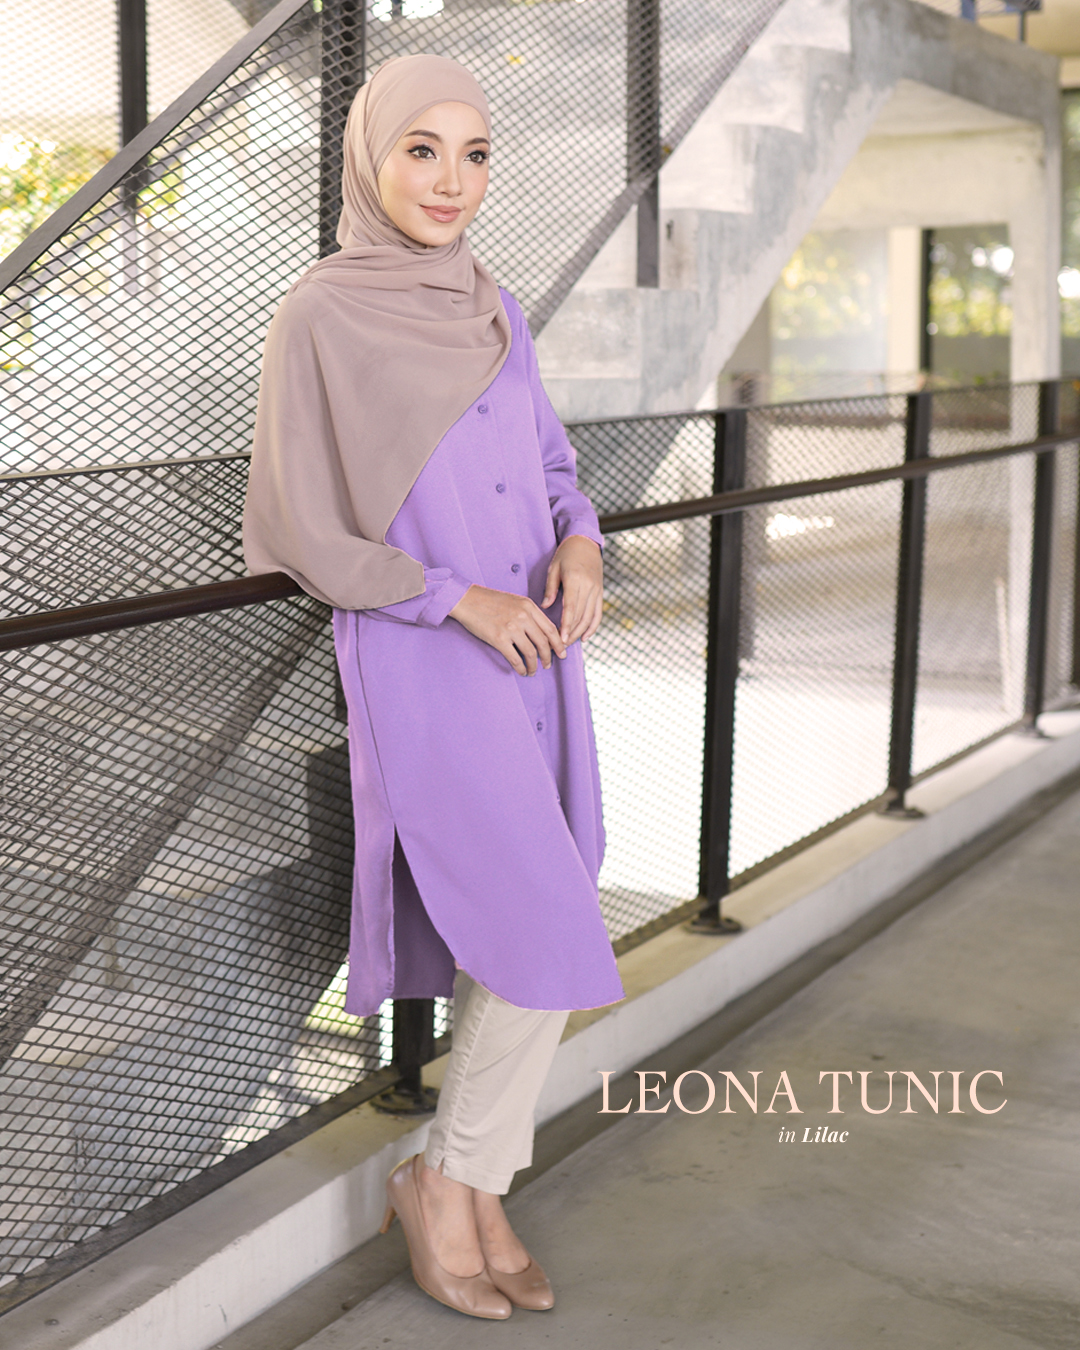 Leona Tunic in Lilac